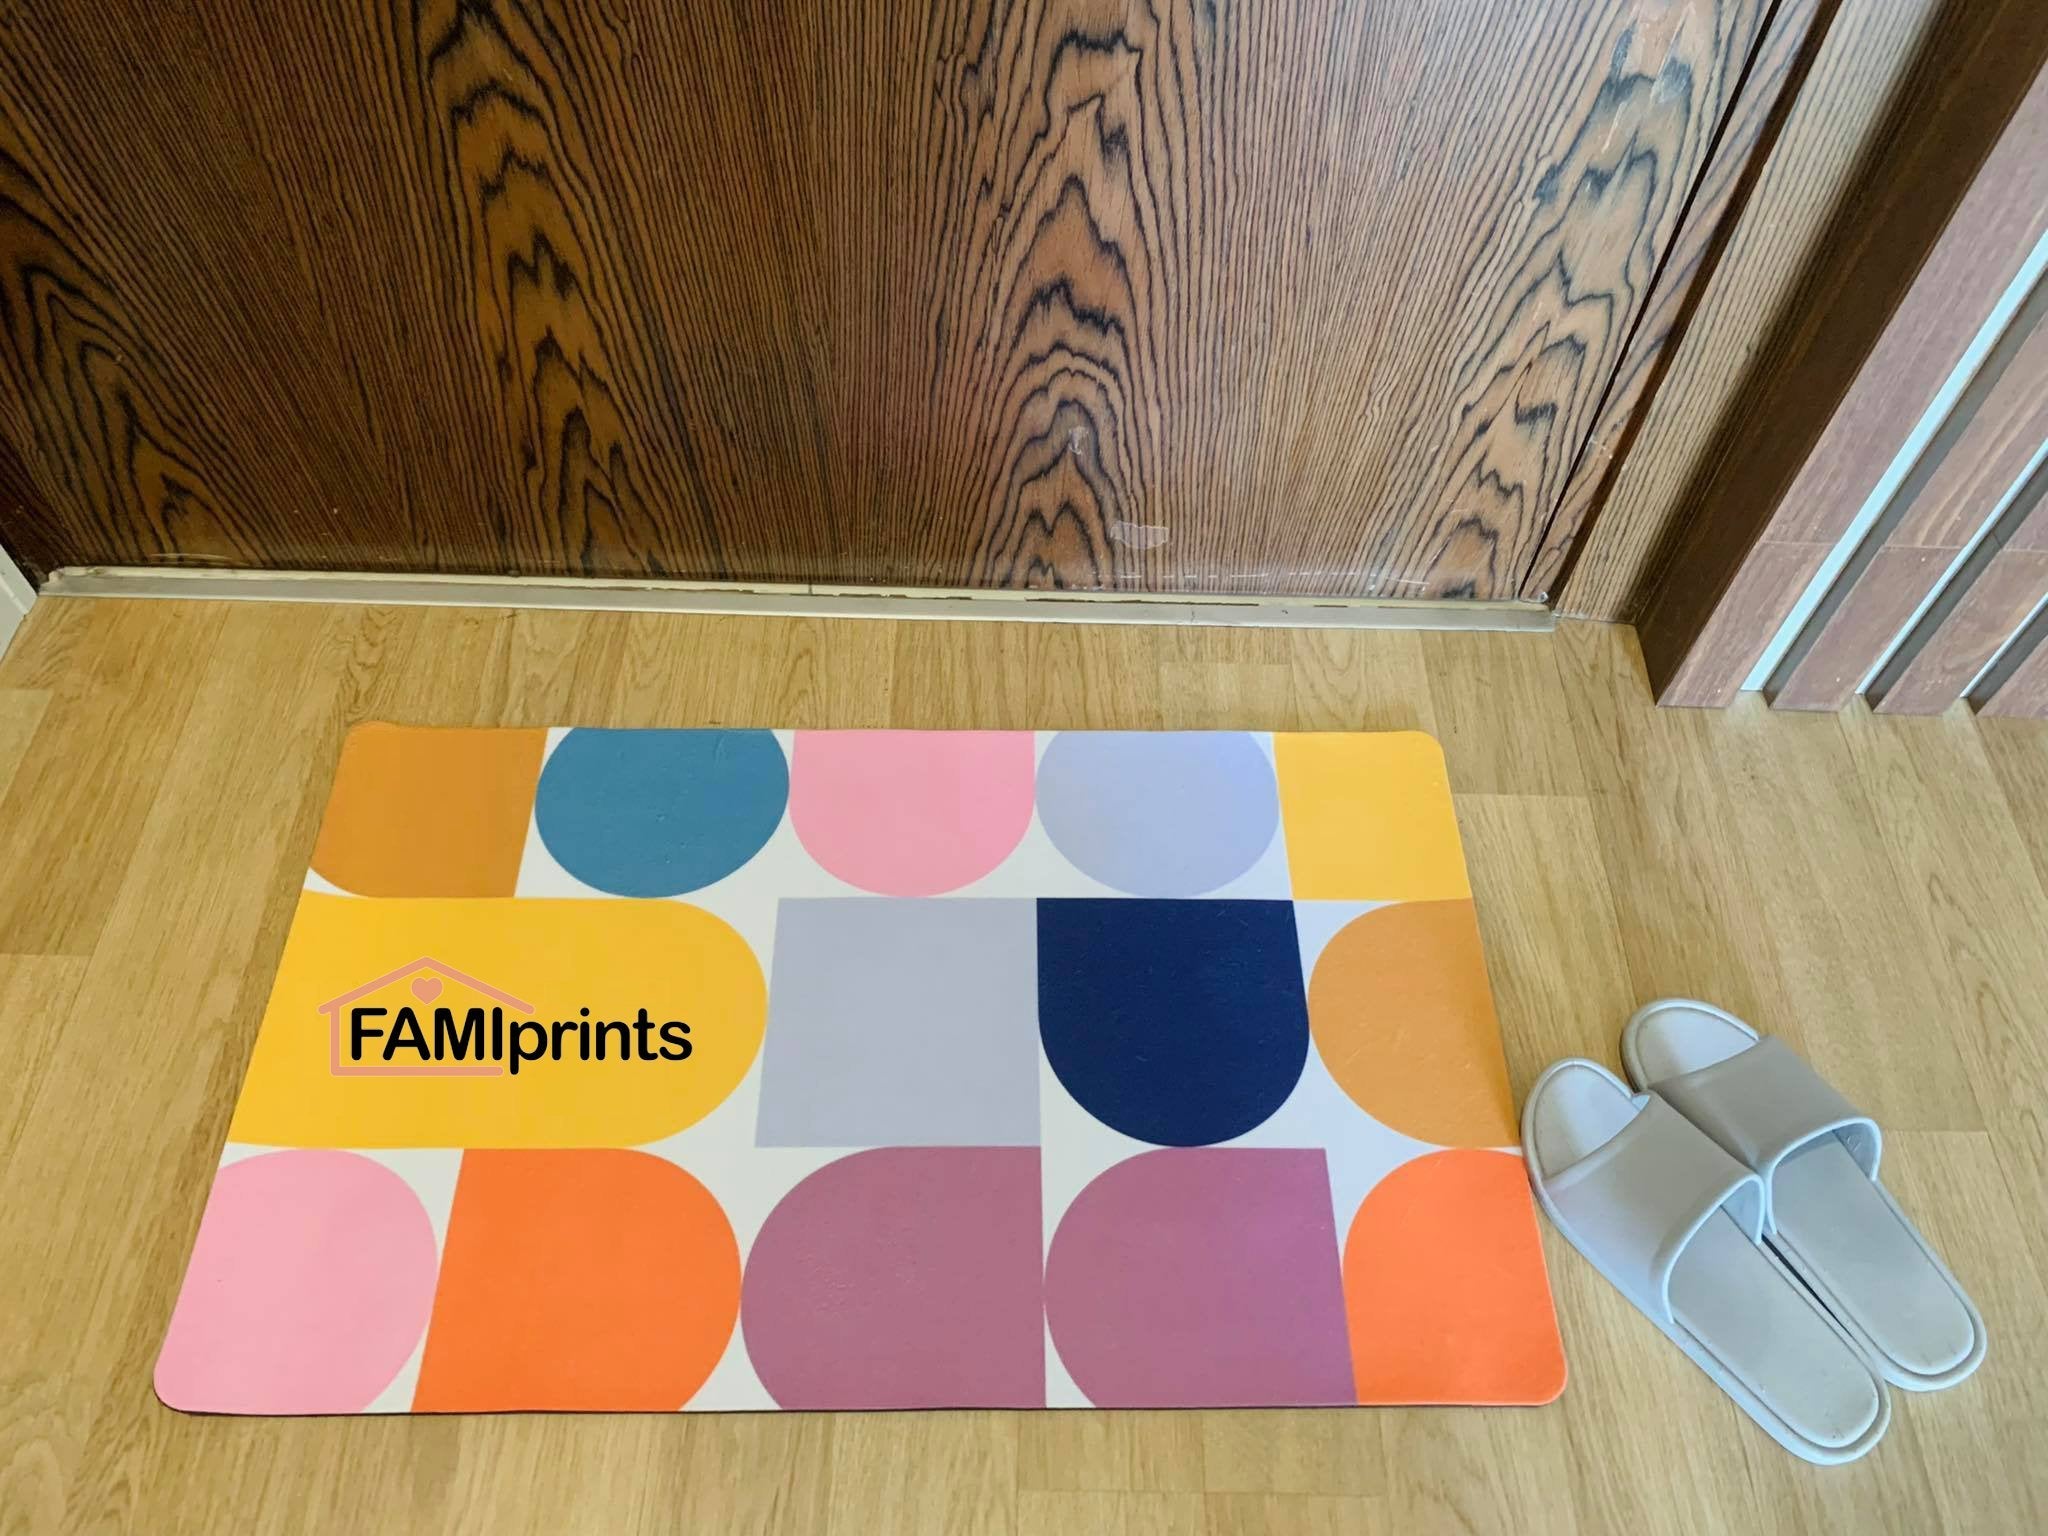 Custom Doormat, Personalized Family Name, Black Cassette